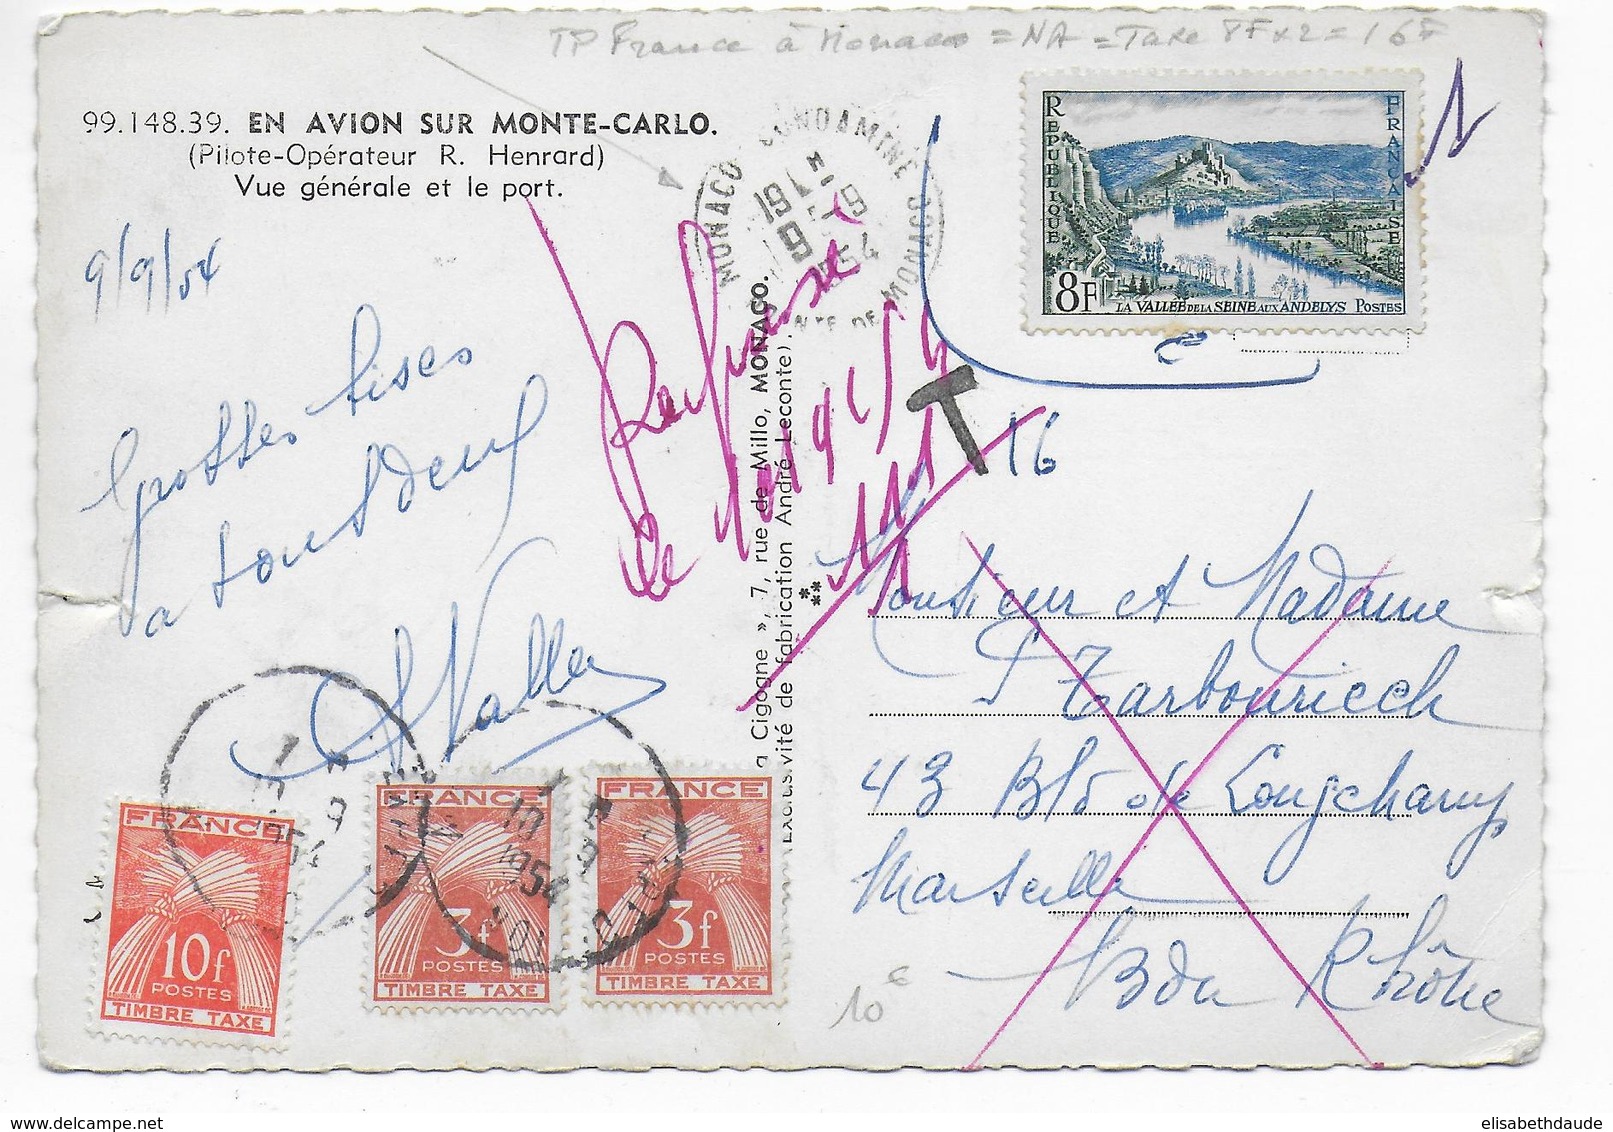 MONACO - 1954 - TIMBRE DE FRANCE NON VALIDE UTILISE à MONACO => TAXE - CP => MARSEILLE => REFUSE - Poststempel